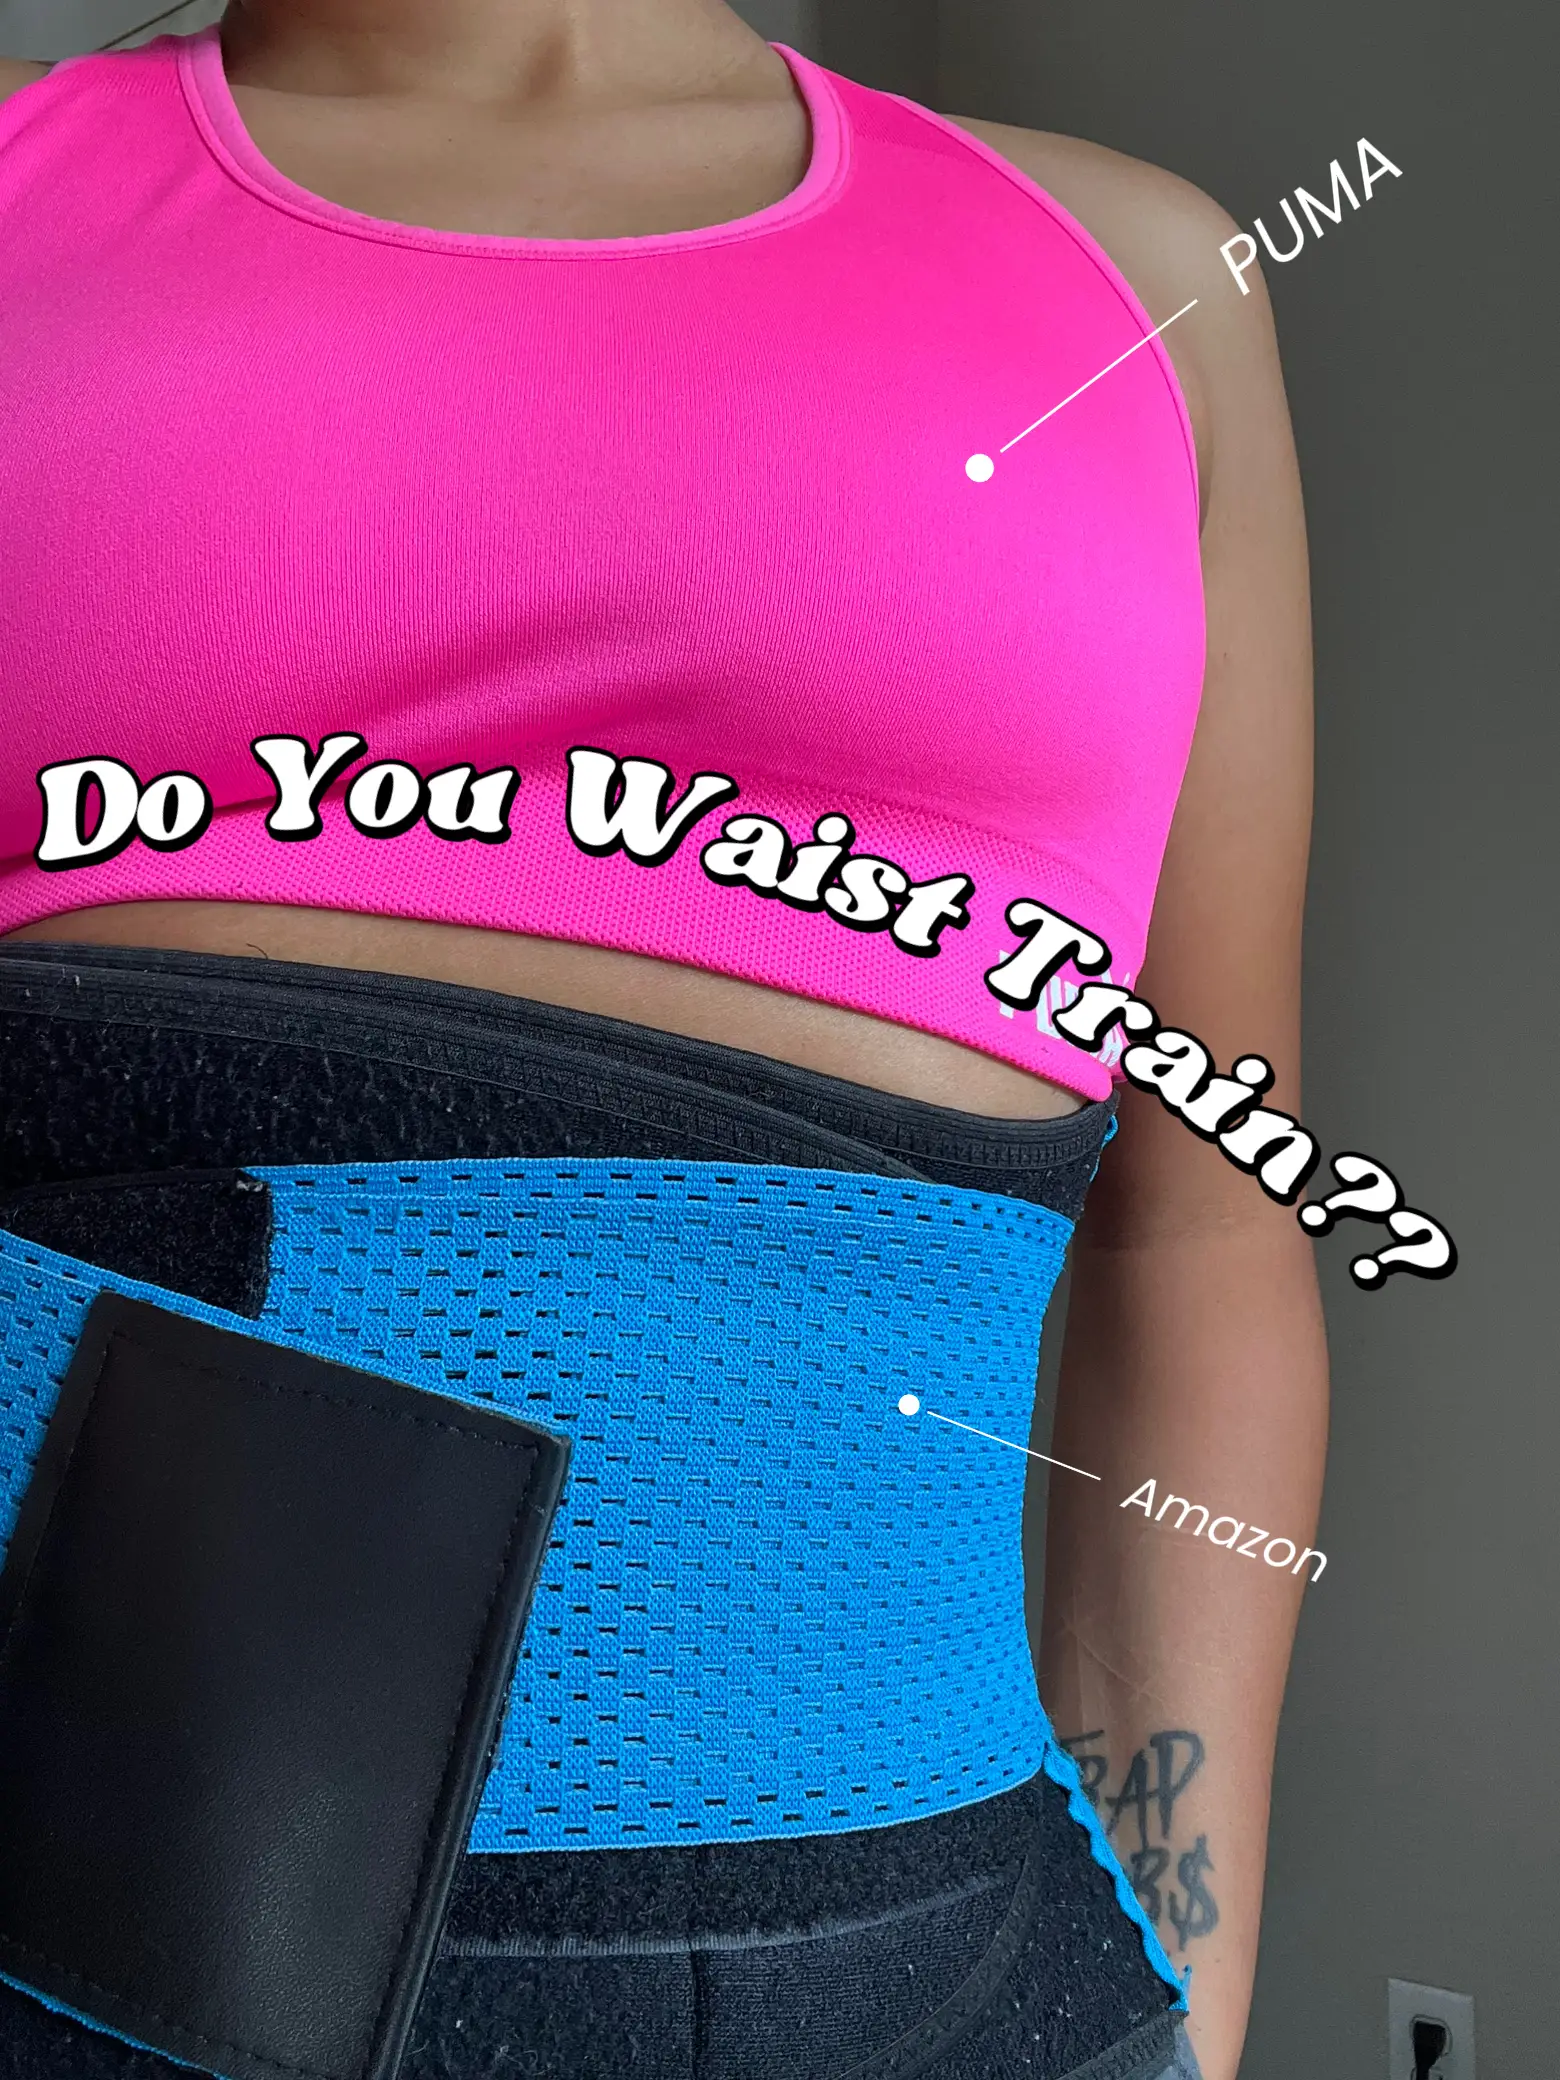 how to wear a waist trainner - Lemon8 Search